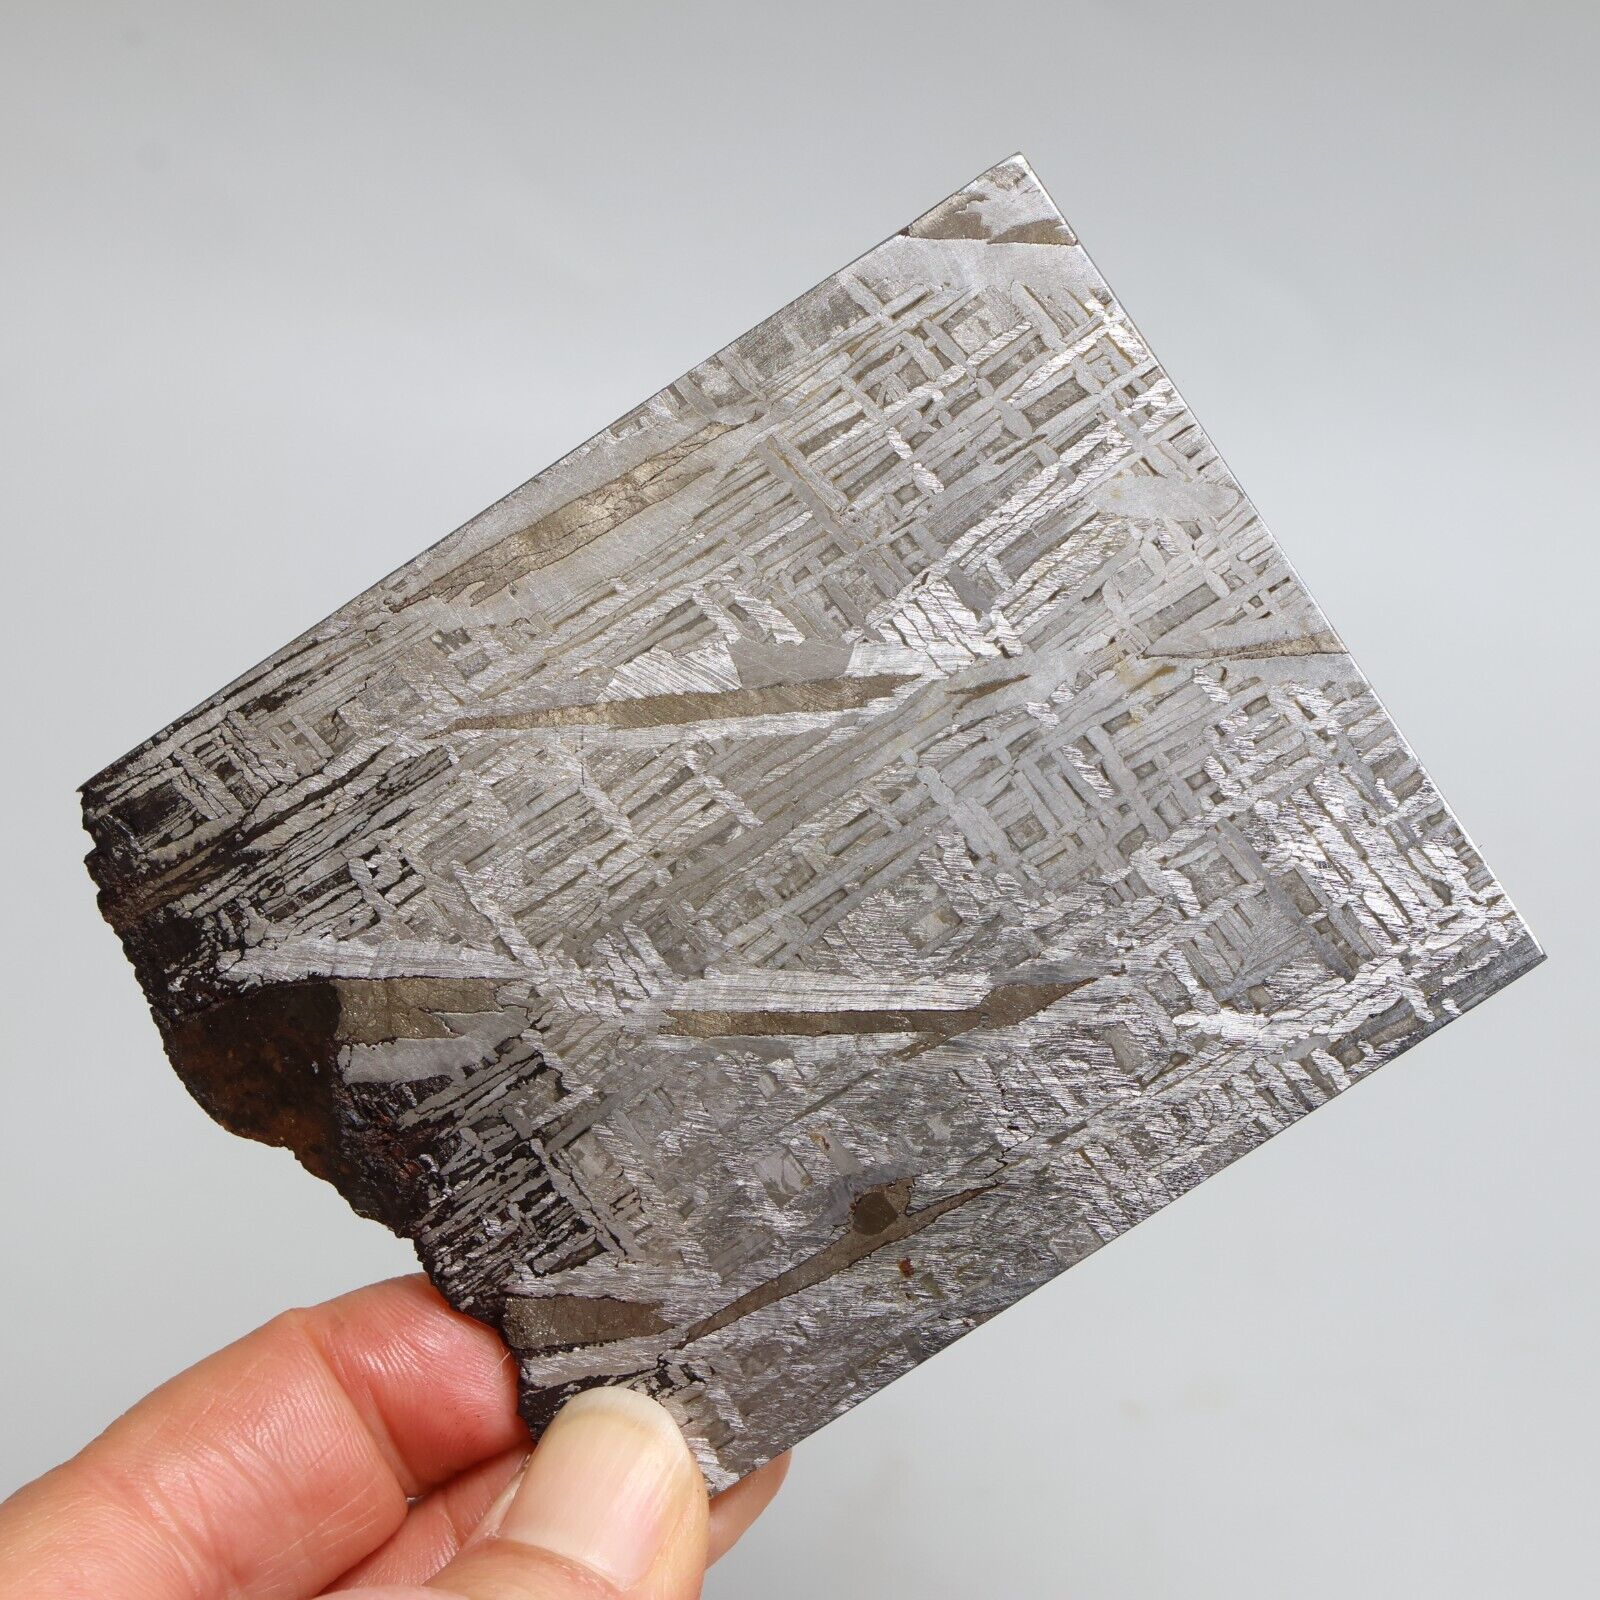 165g Muonionalusta Meteorite ,  Naturally Iron Meteorite slice, Collection F242